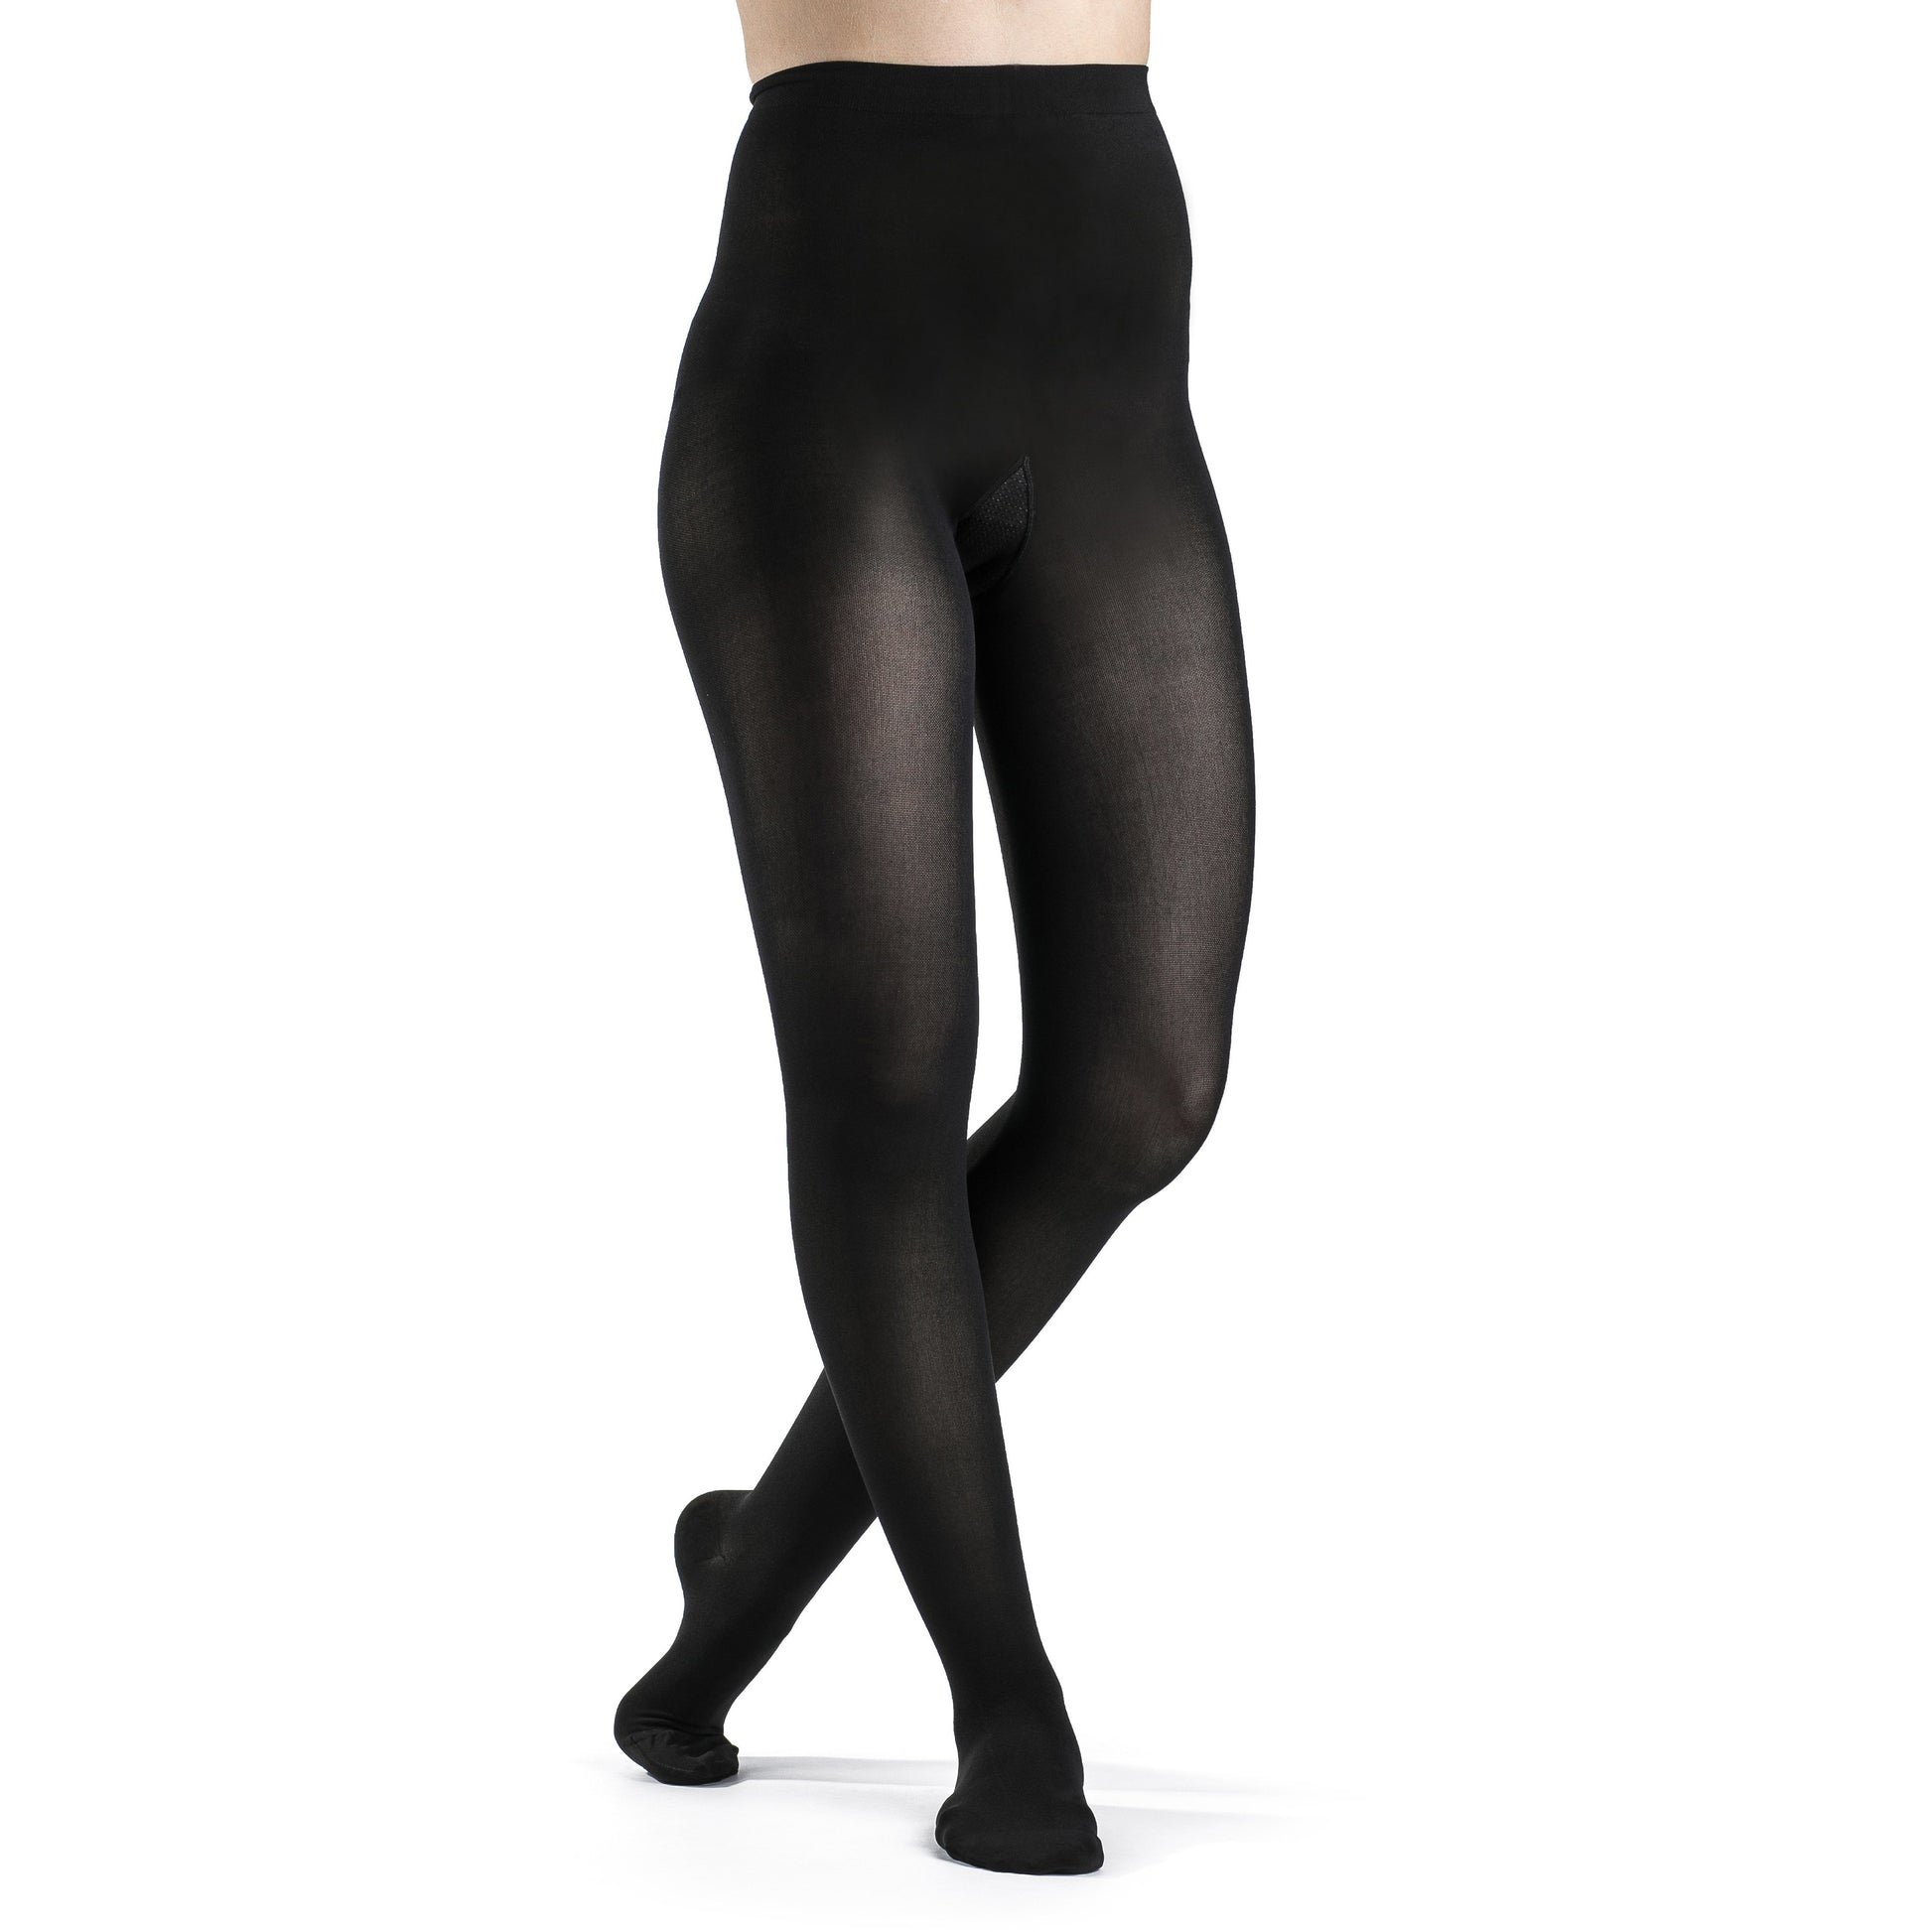 Sigvaris Soft Opaque Women's 15-20 mmHg Pantyhose, Black